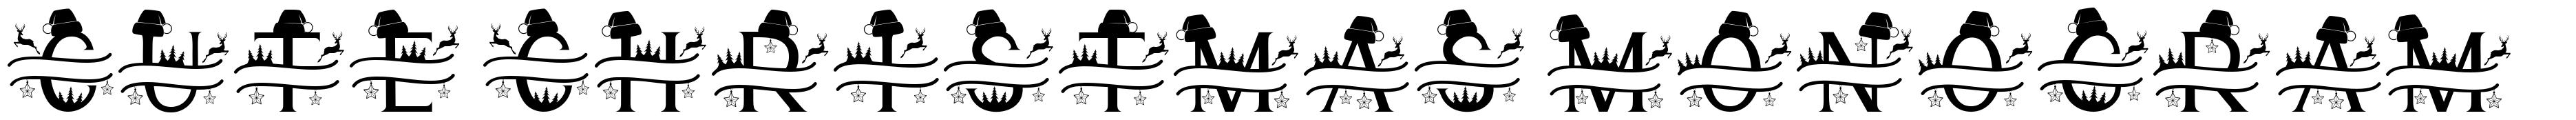 Cute Christmas Monogram font